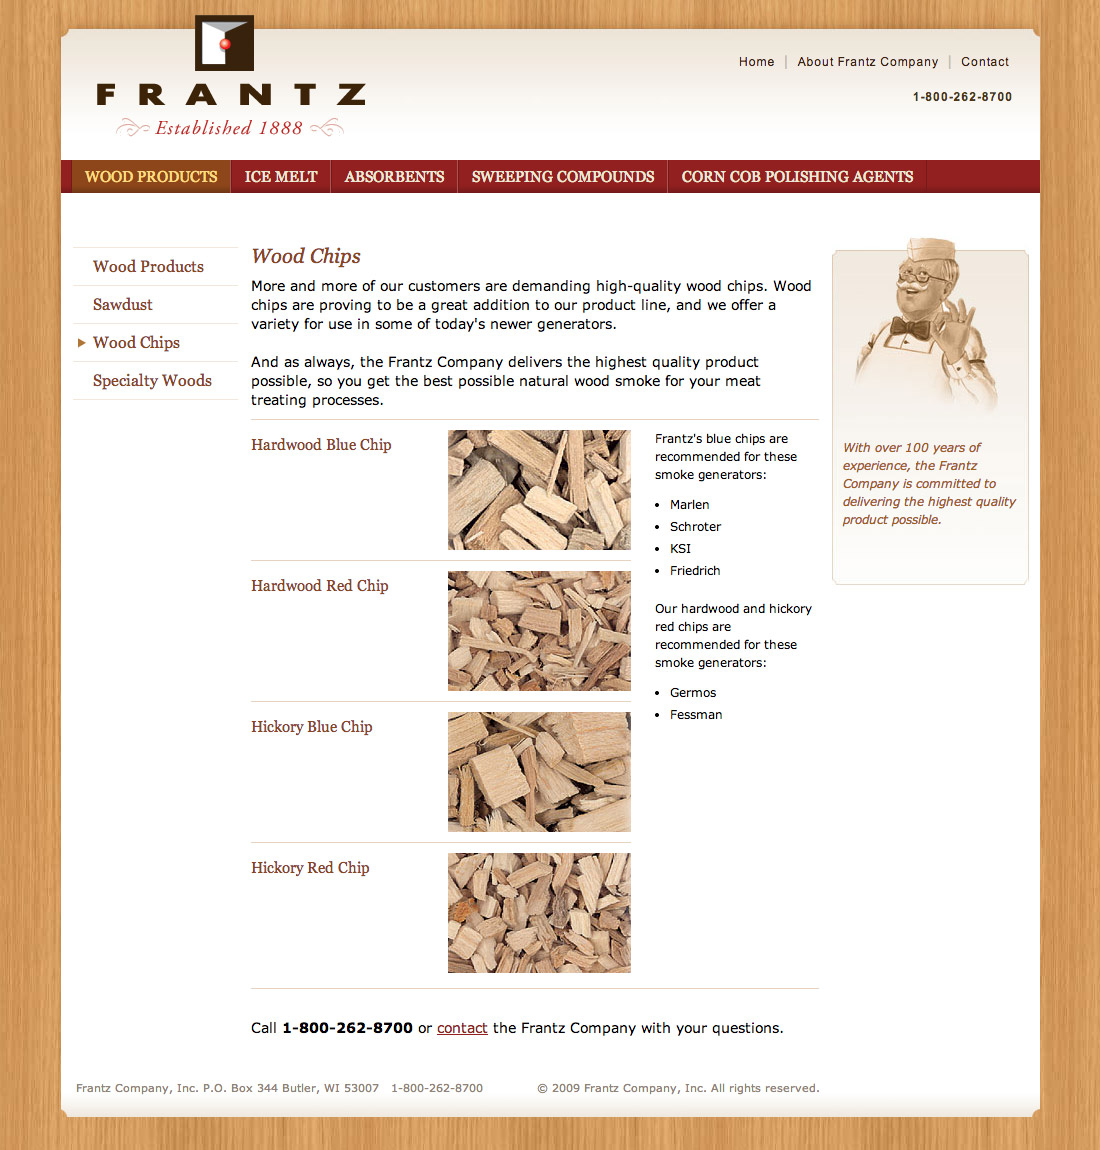 Frantz Company wood products